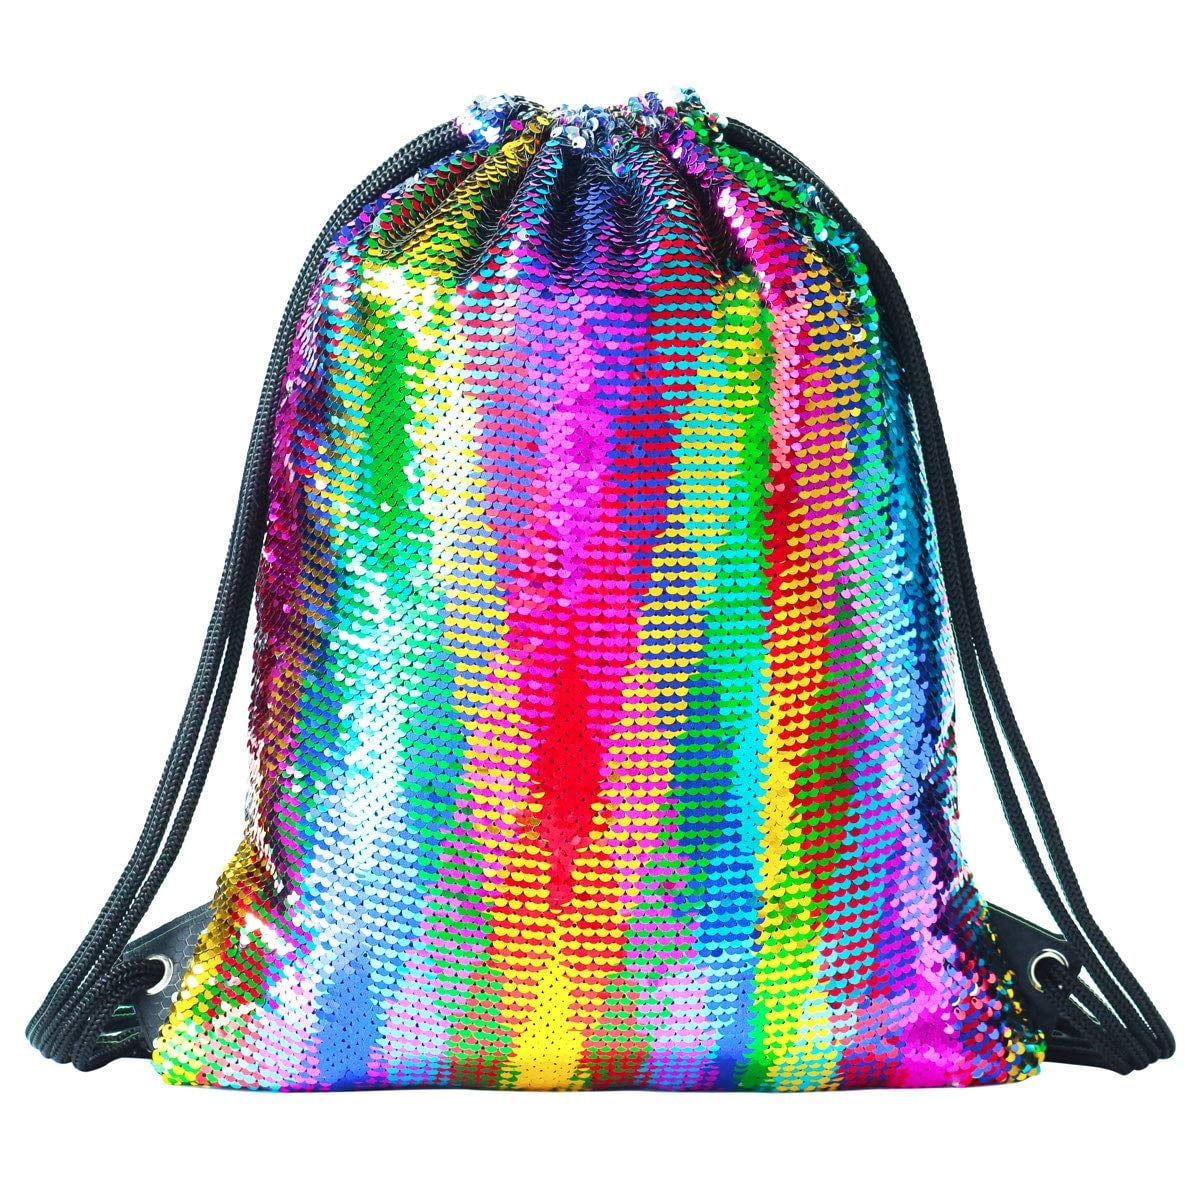 CHIC DIARY Sequins Reversible Magic Glitter Drawstring Mermaid Backpack Sports Gym Dance Bag String Bag Elephant pattern 